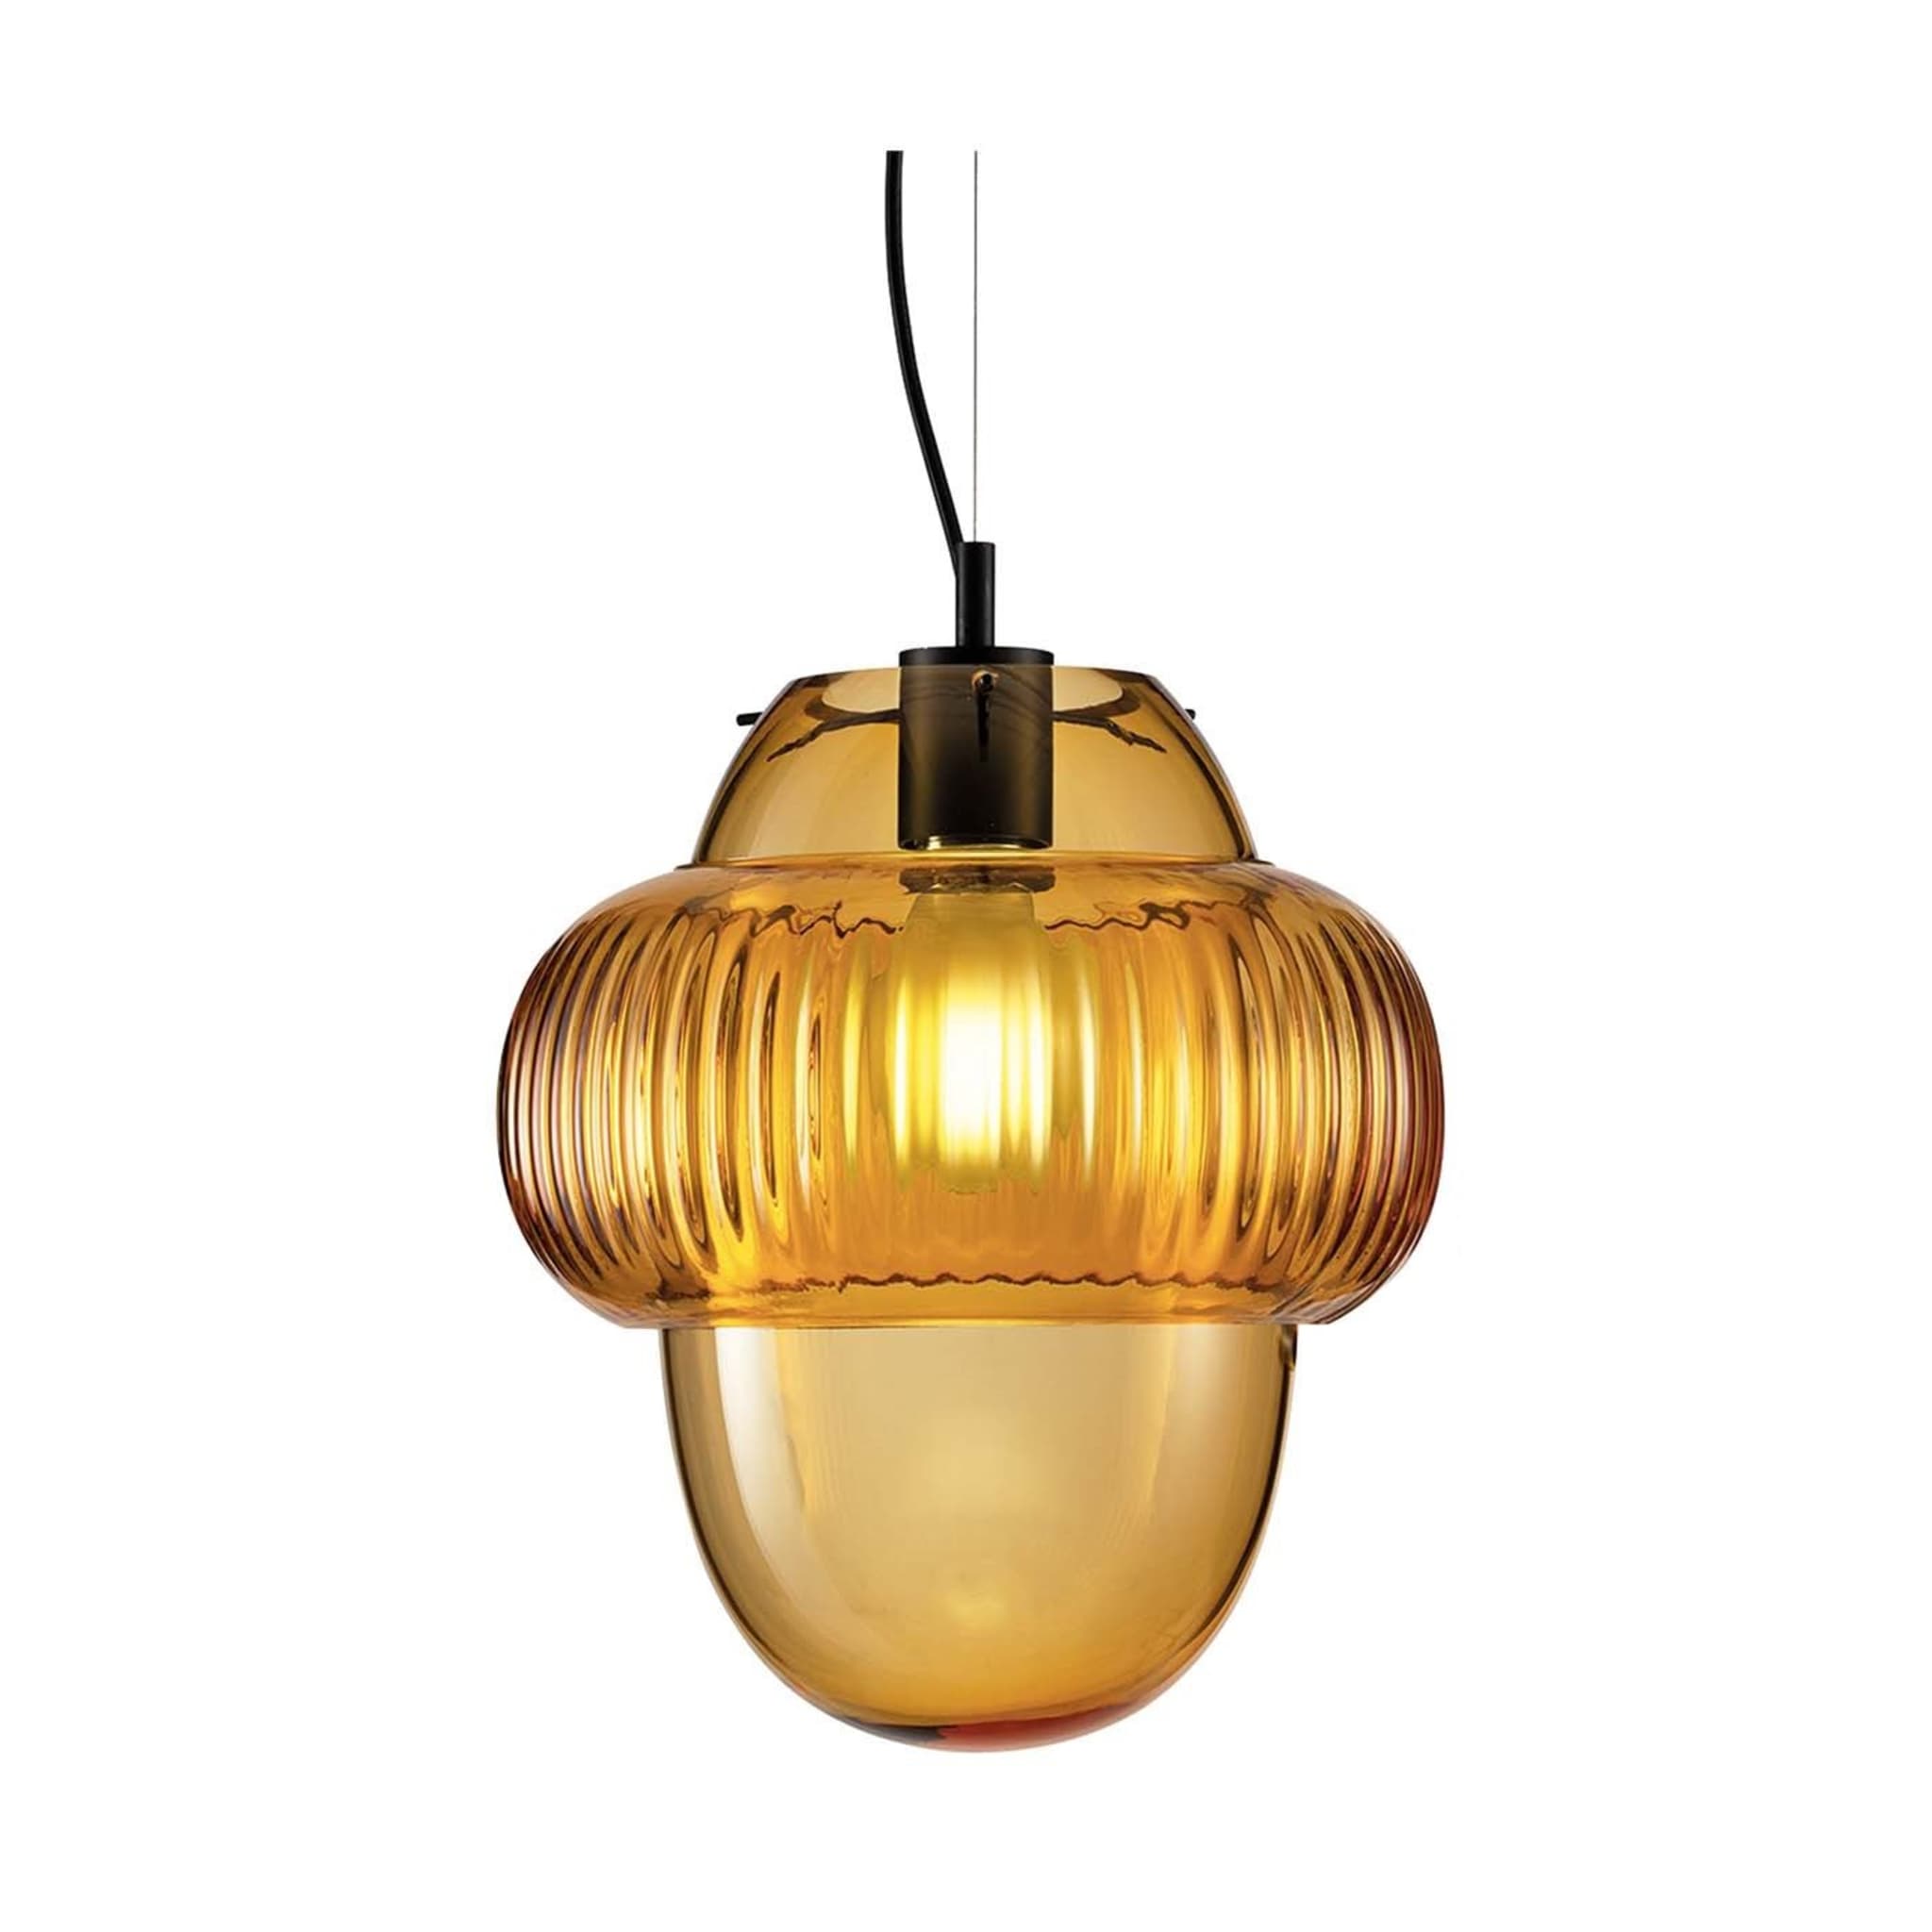 Oround amber glass pendant light - Main view